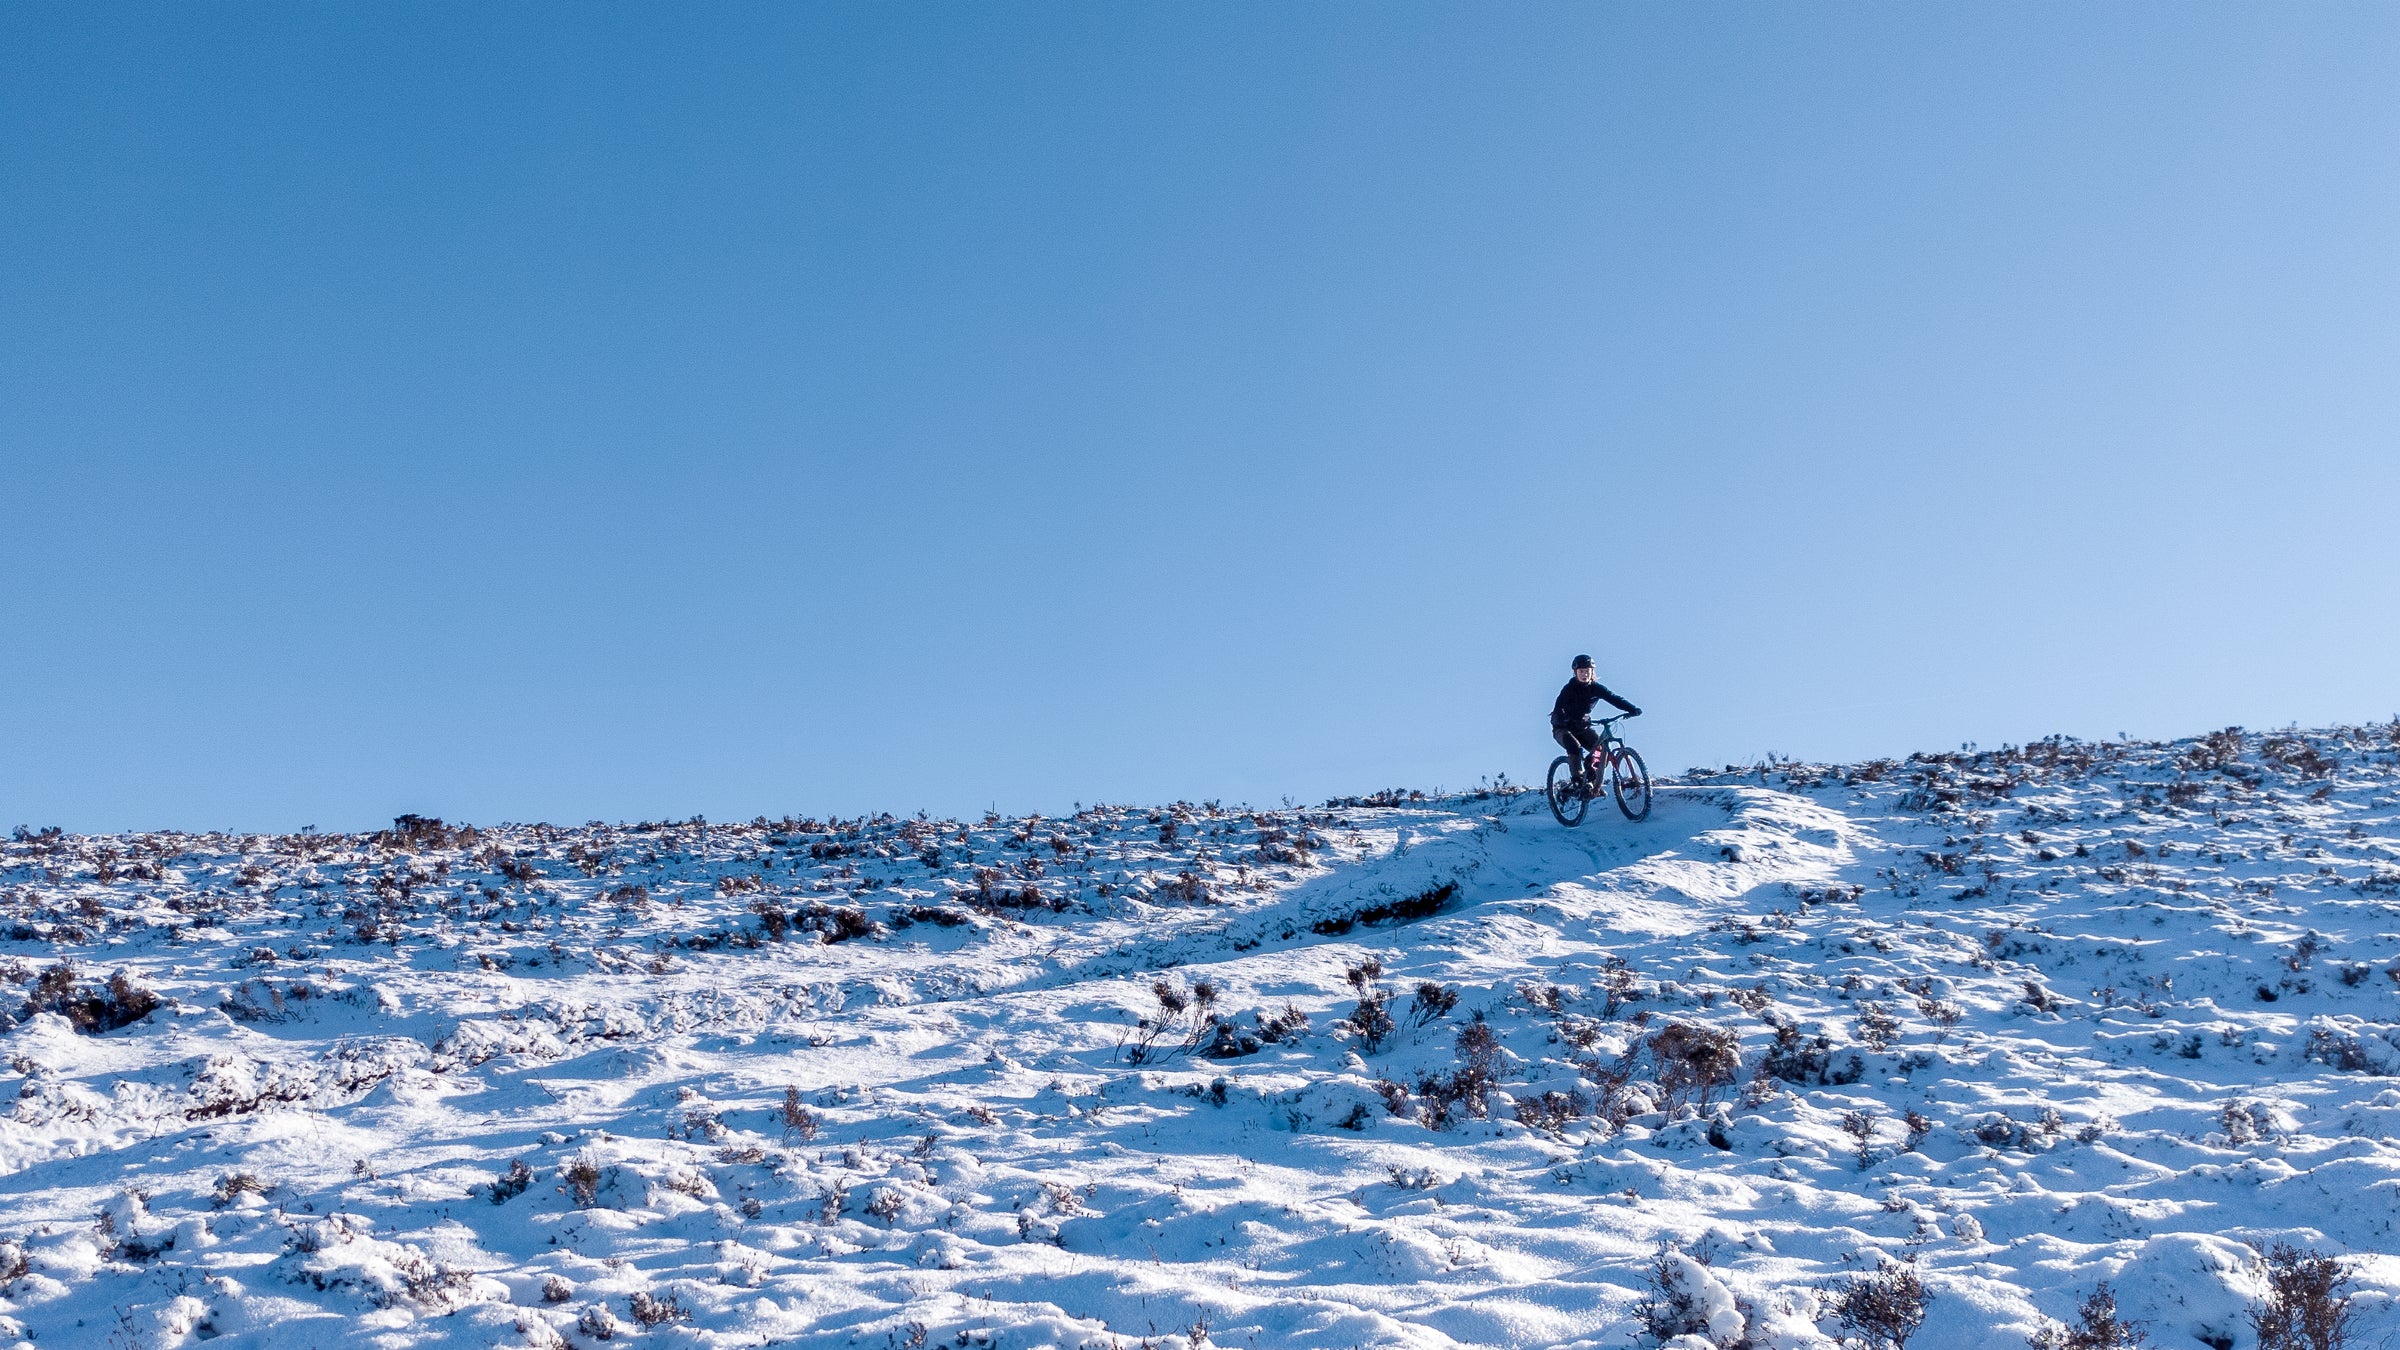 Mountainbiker riding in the Innerleithen snow